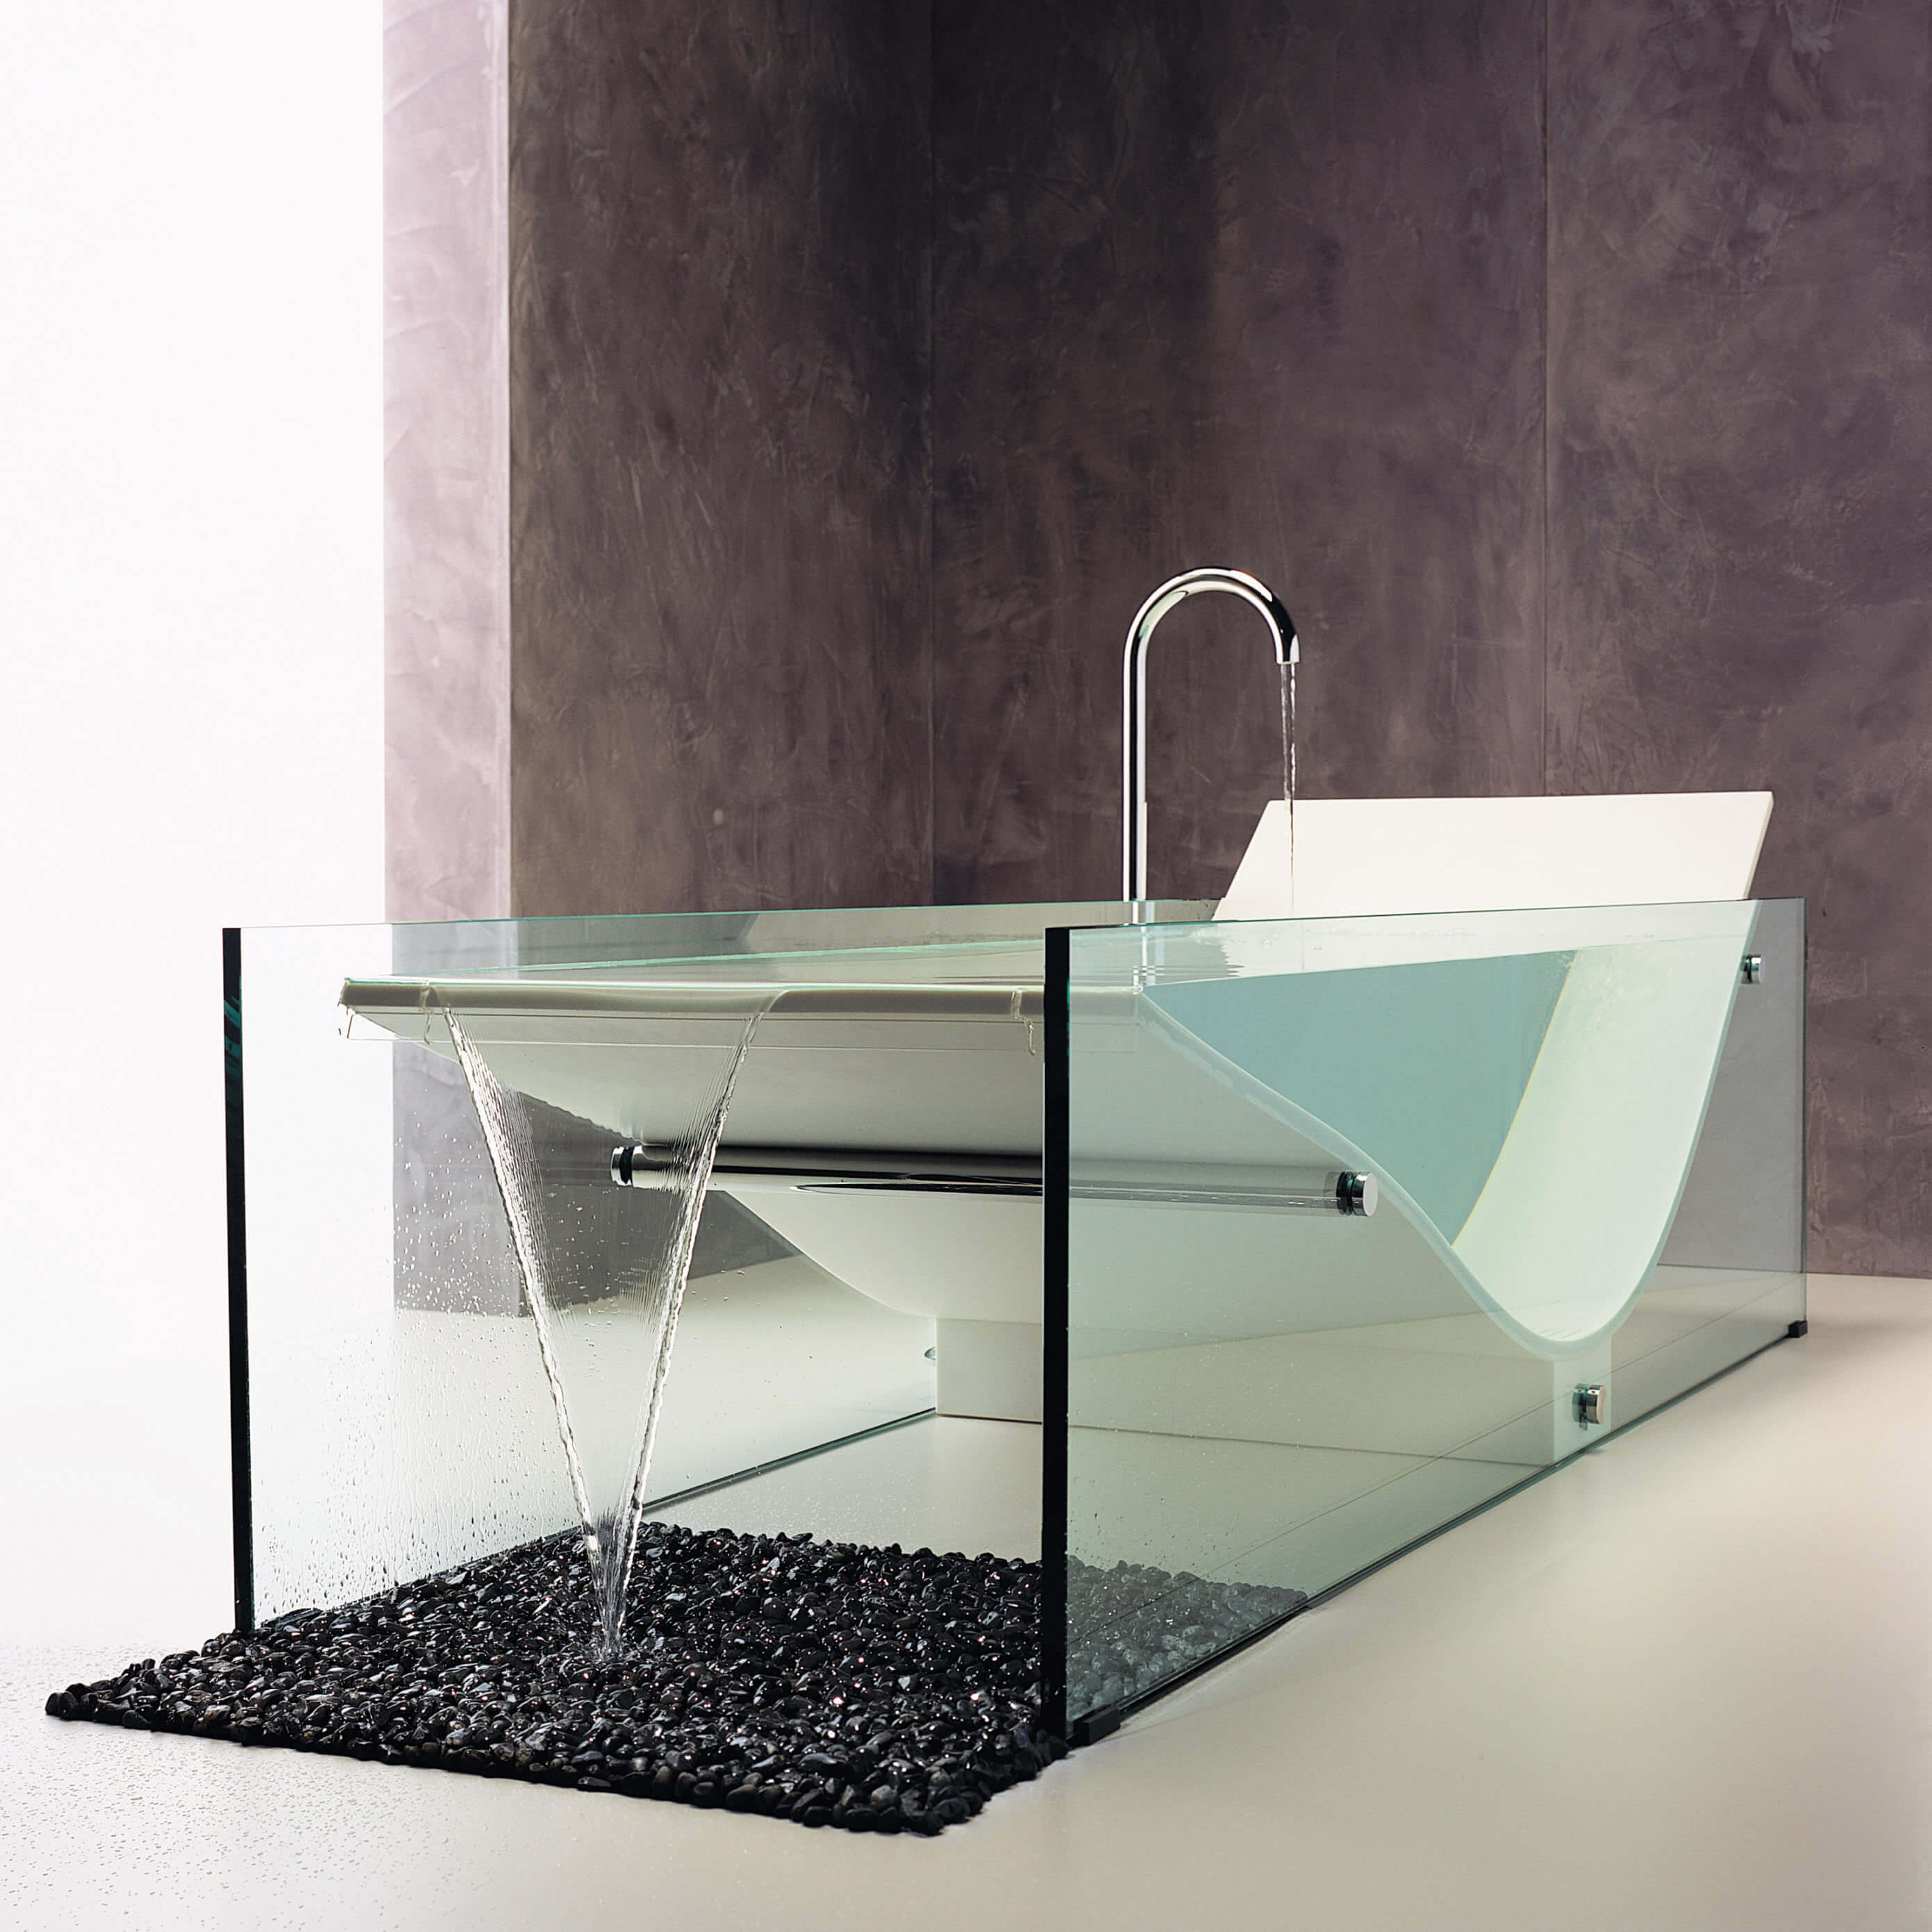 Стеклянная ванна цены. Ванна Glass Clessidra акрил. Ванна Hoesch Water Lounge 3704 стекло. Стеклянная ванна le COB. Ванна стеклянные MOMA Design Италия.